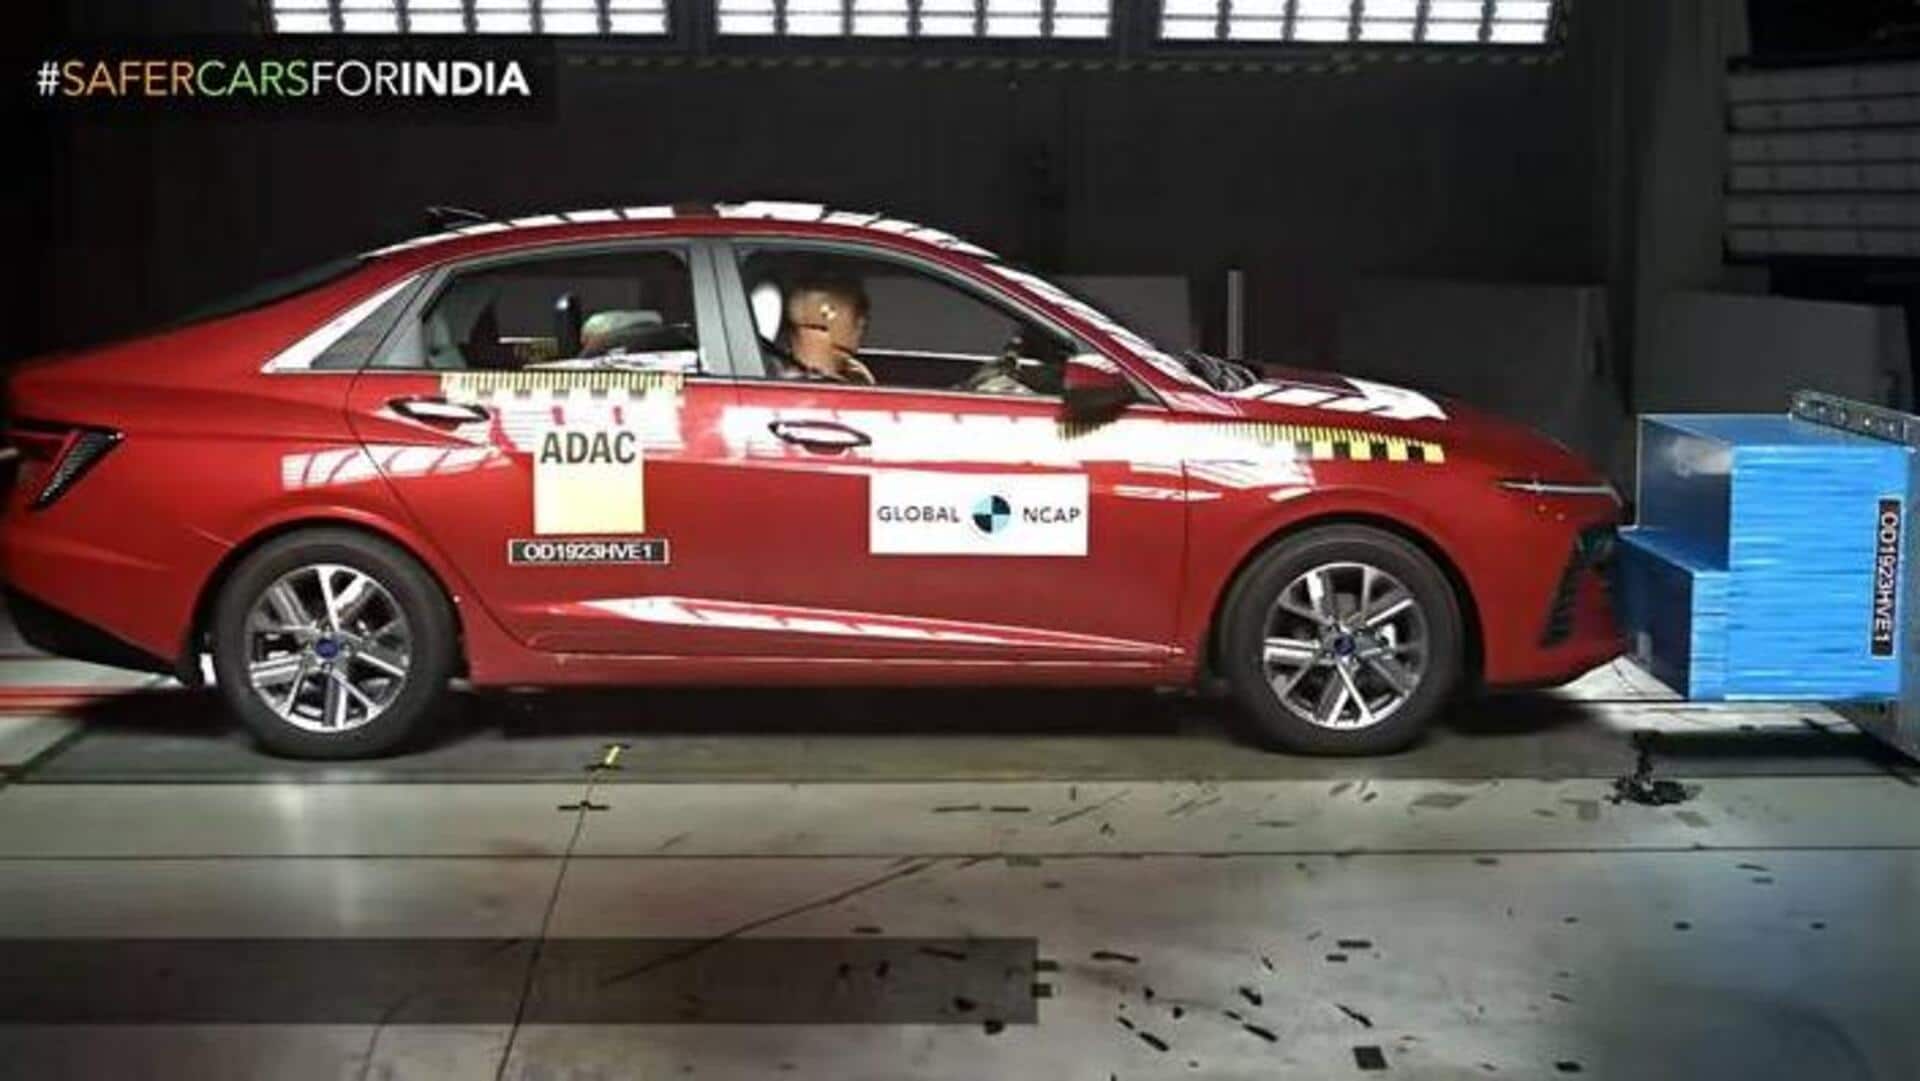 Global NCAP:గ్లోబల్ NCAP ద్వారా 5 స్టార్ సేఫ్టీ రేటింగ్ పొందిన కార్లుఇవే!